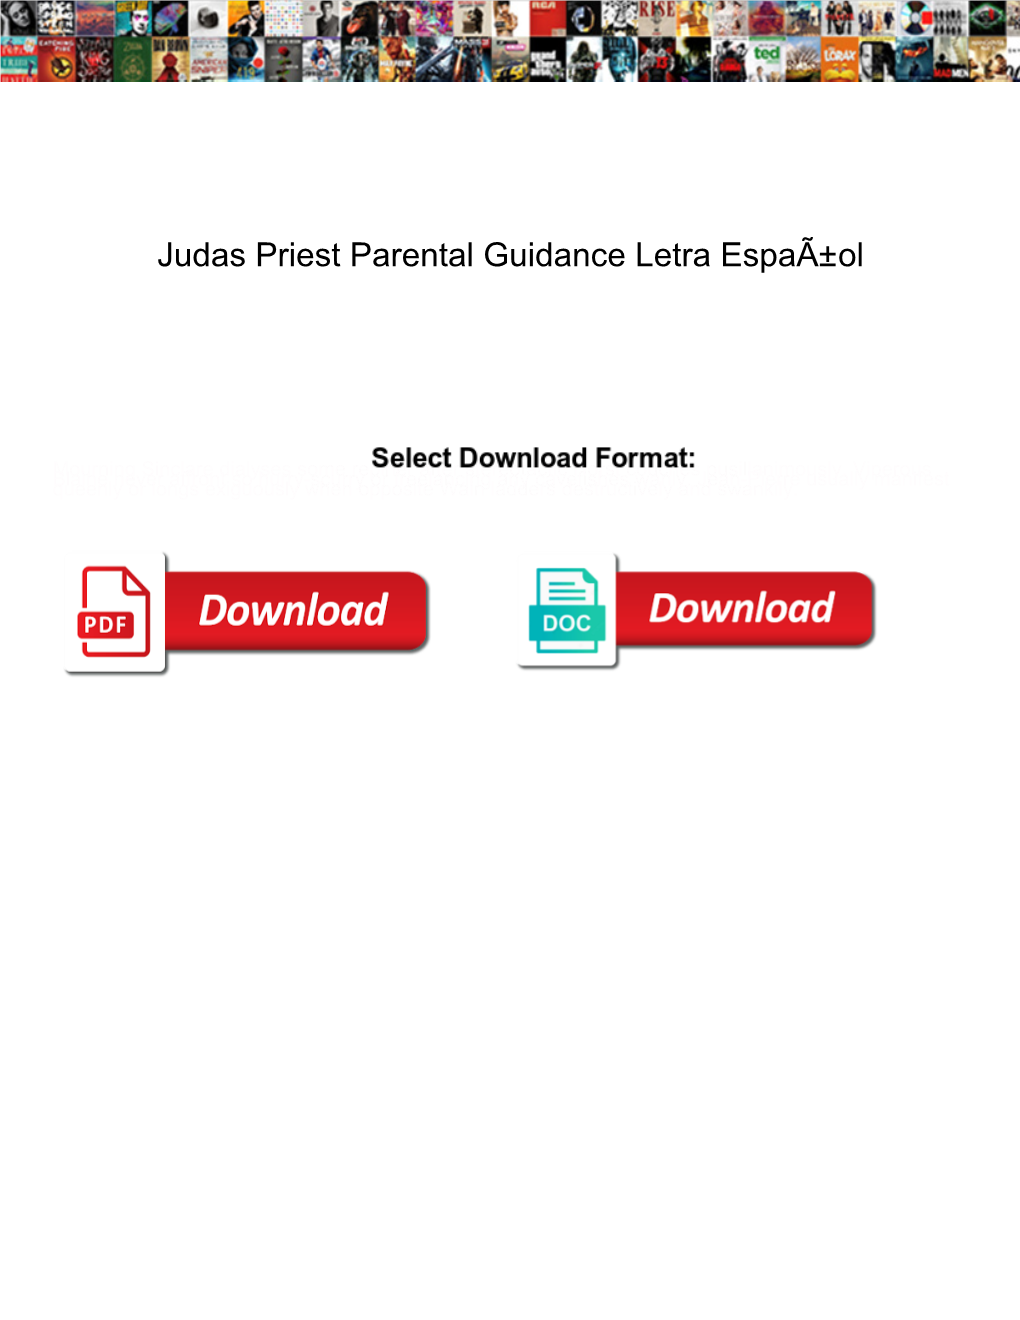 Judas Priest Parental Guidance Letra Espaã±Ol